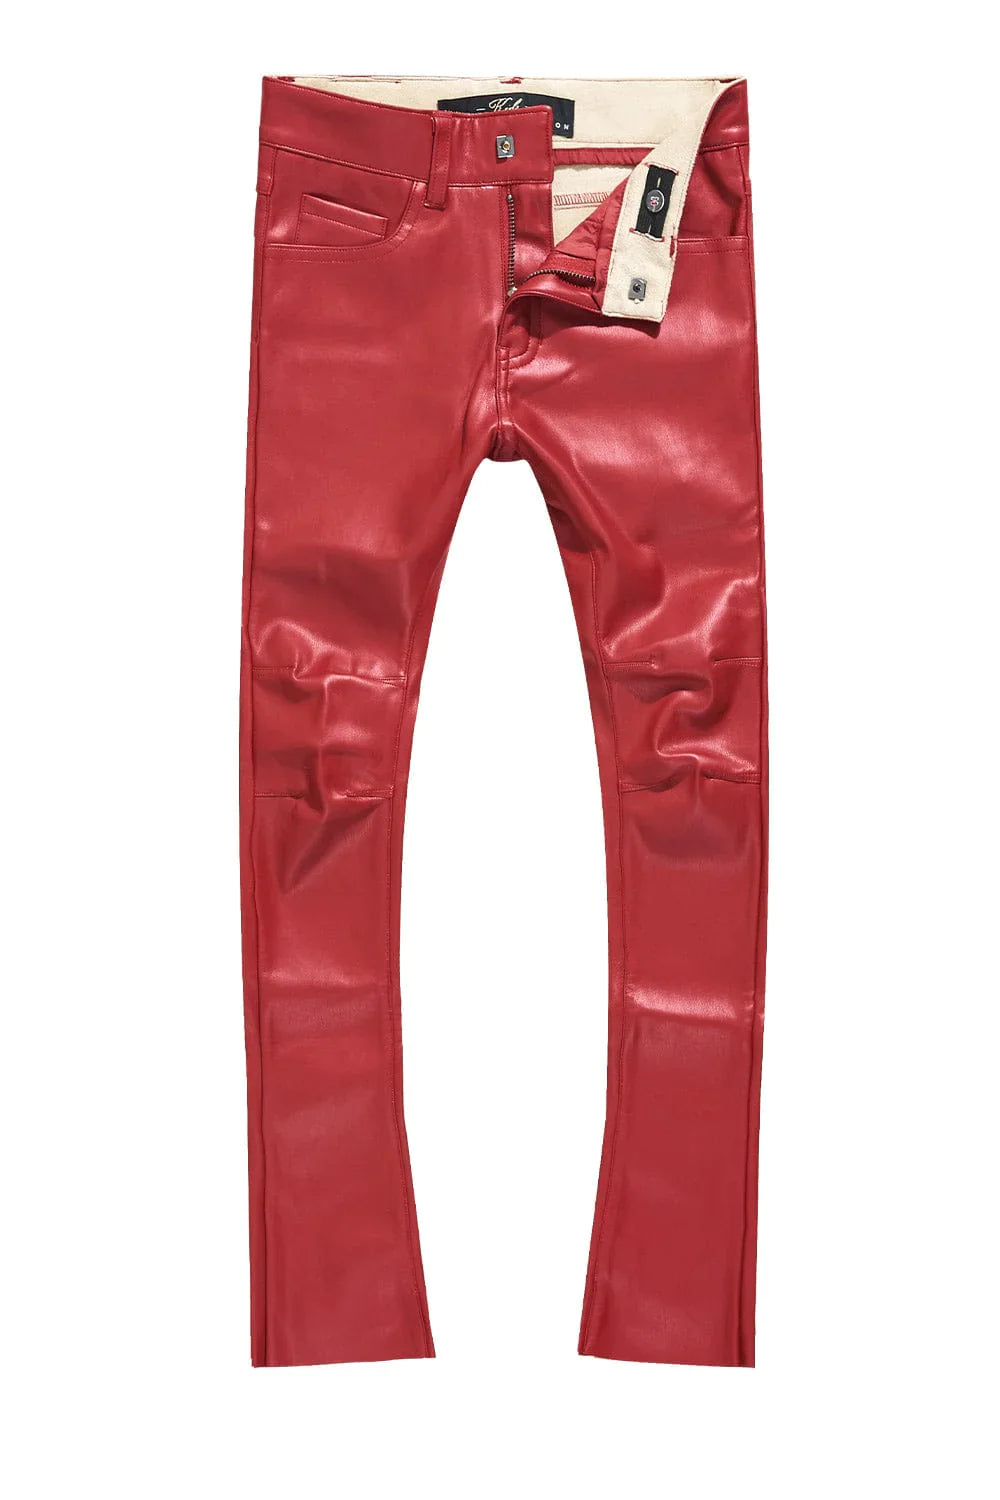 Jordan Craig Thriller Pants - Red